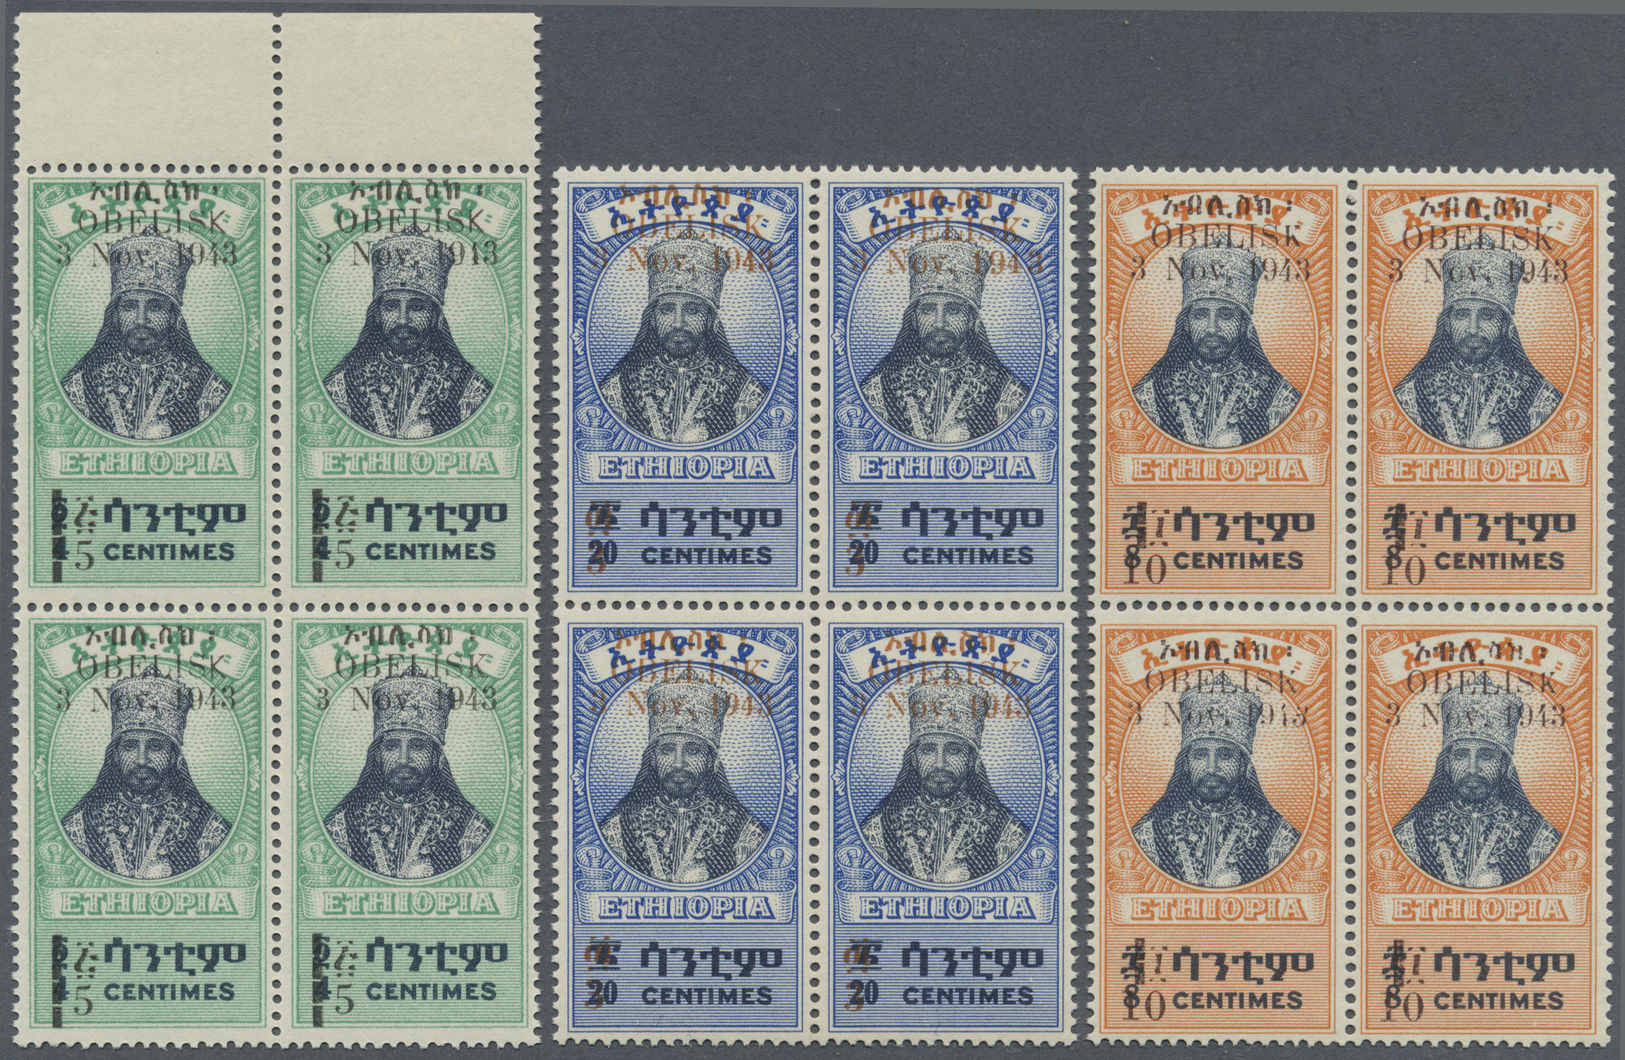 ** Äthiopien: 1943, "OBELISK 3 Nov. 1943" Overprinted Block Of Four Set Of Five Values, All Mint Never Hinged, Very Fine - Ethiopie